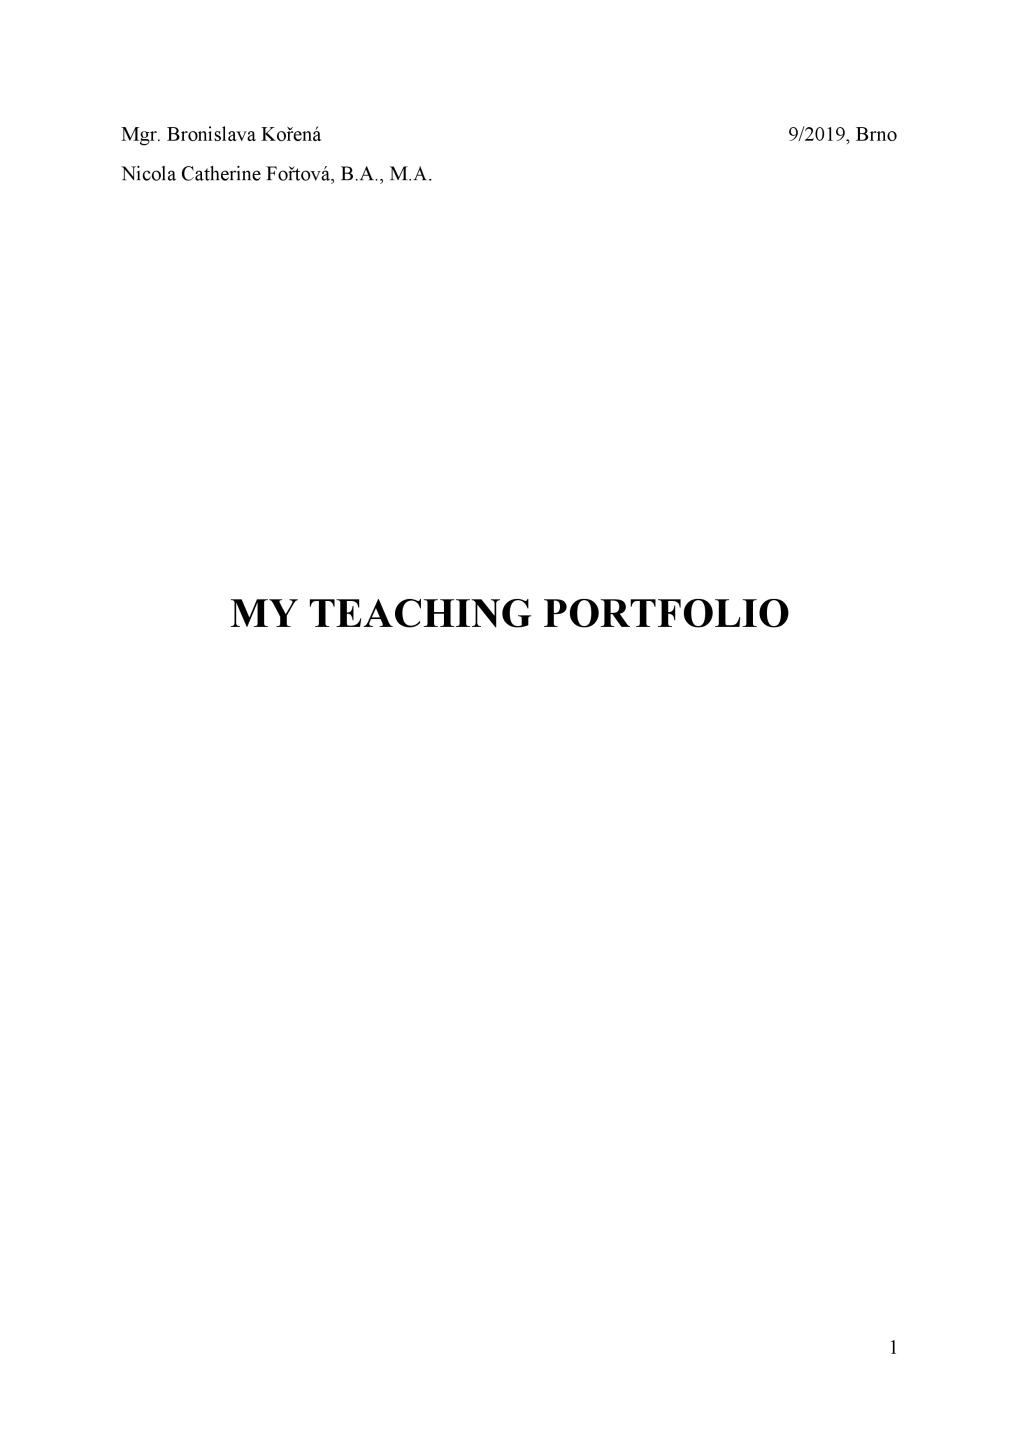 My Teaching Portfolio